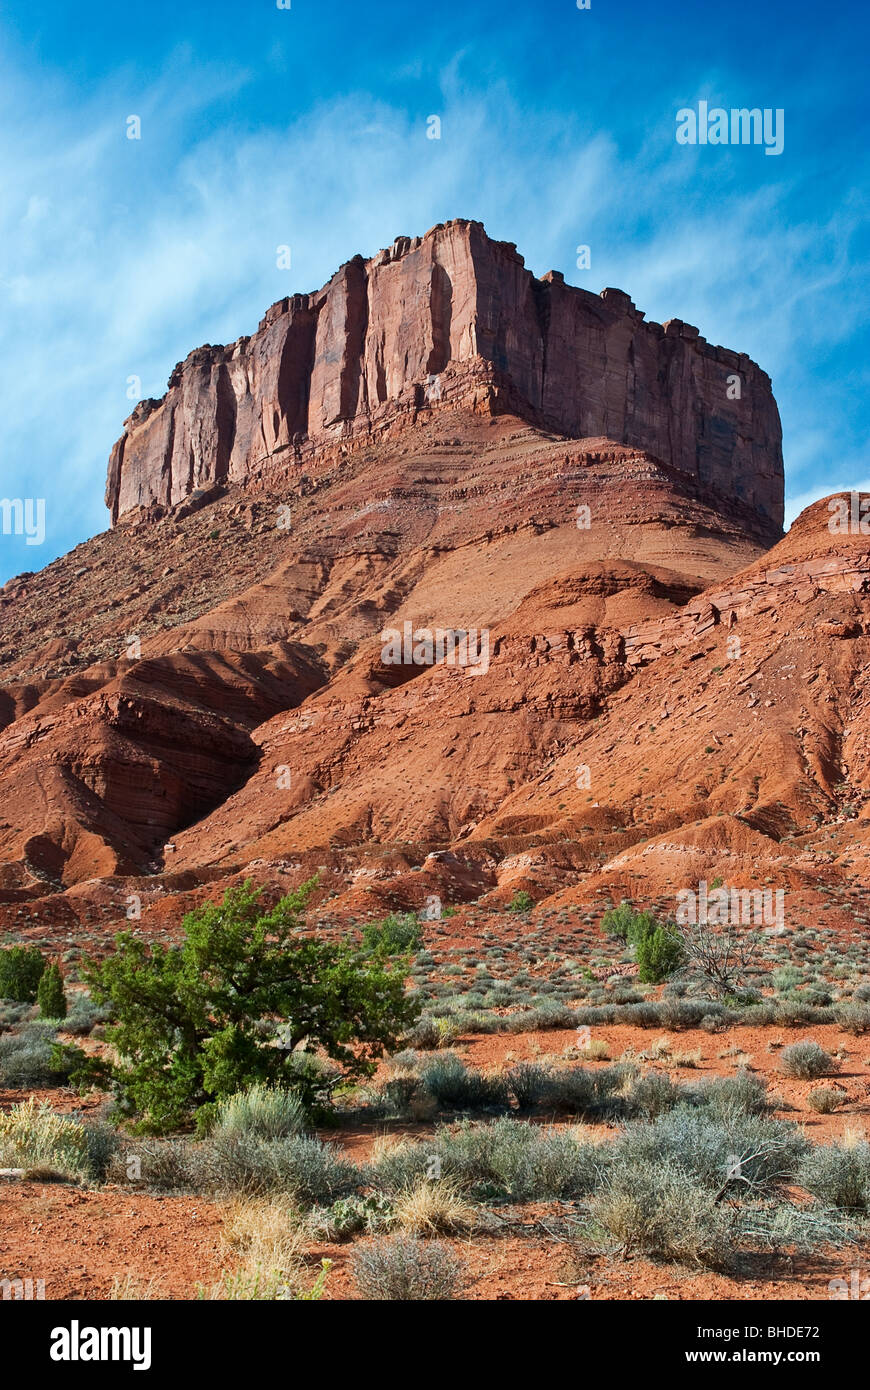 USA, Utah, Moab. Parriott Mesa rises over Castle Valley community near Moab. Stock Photo